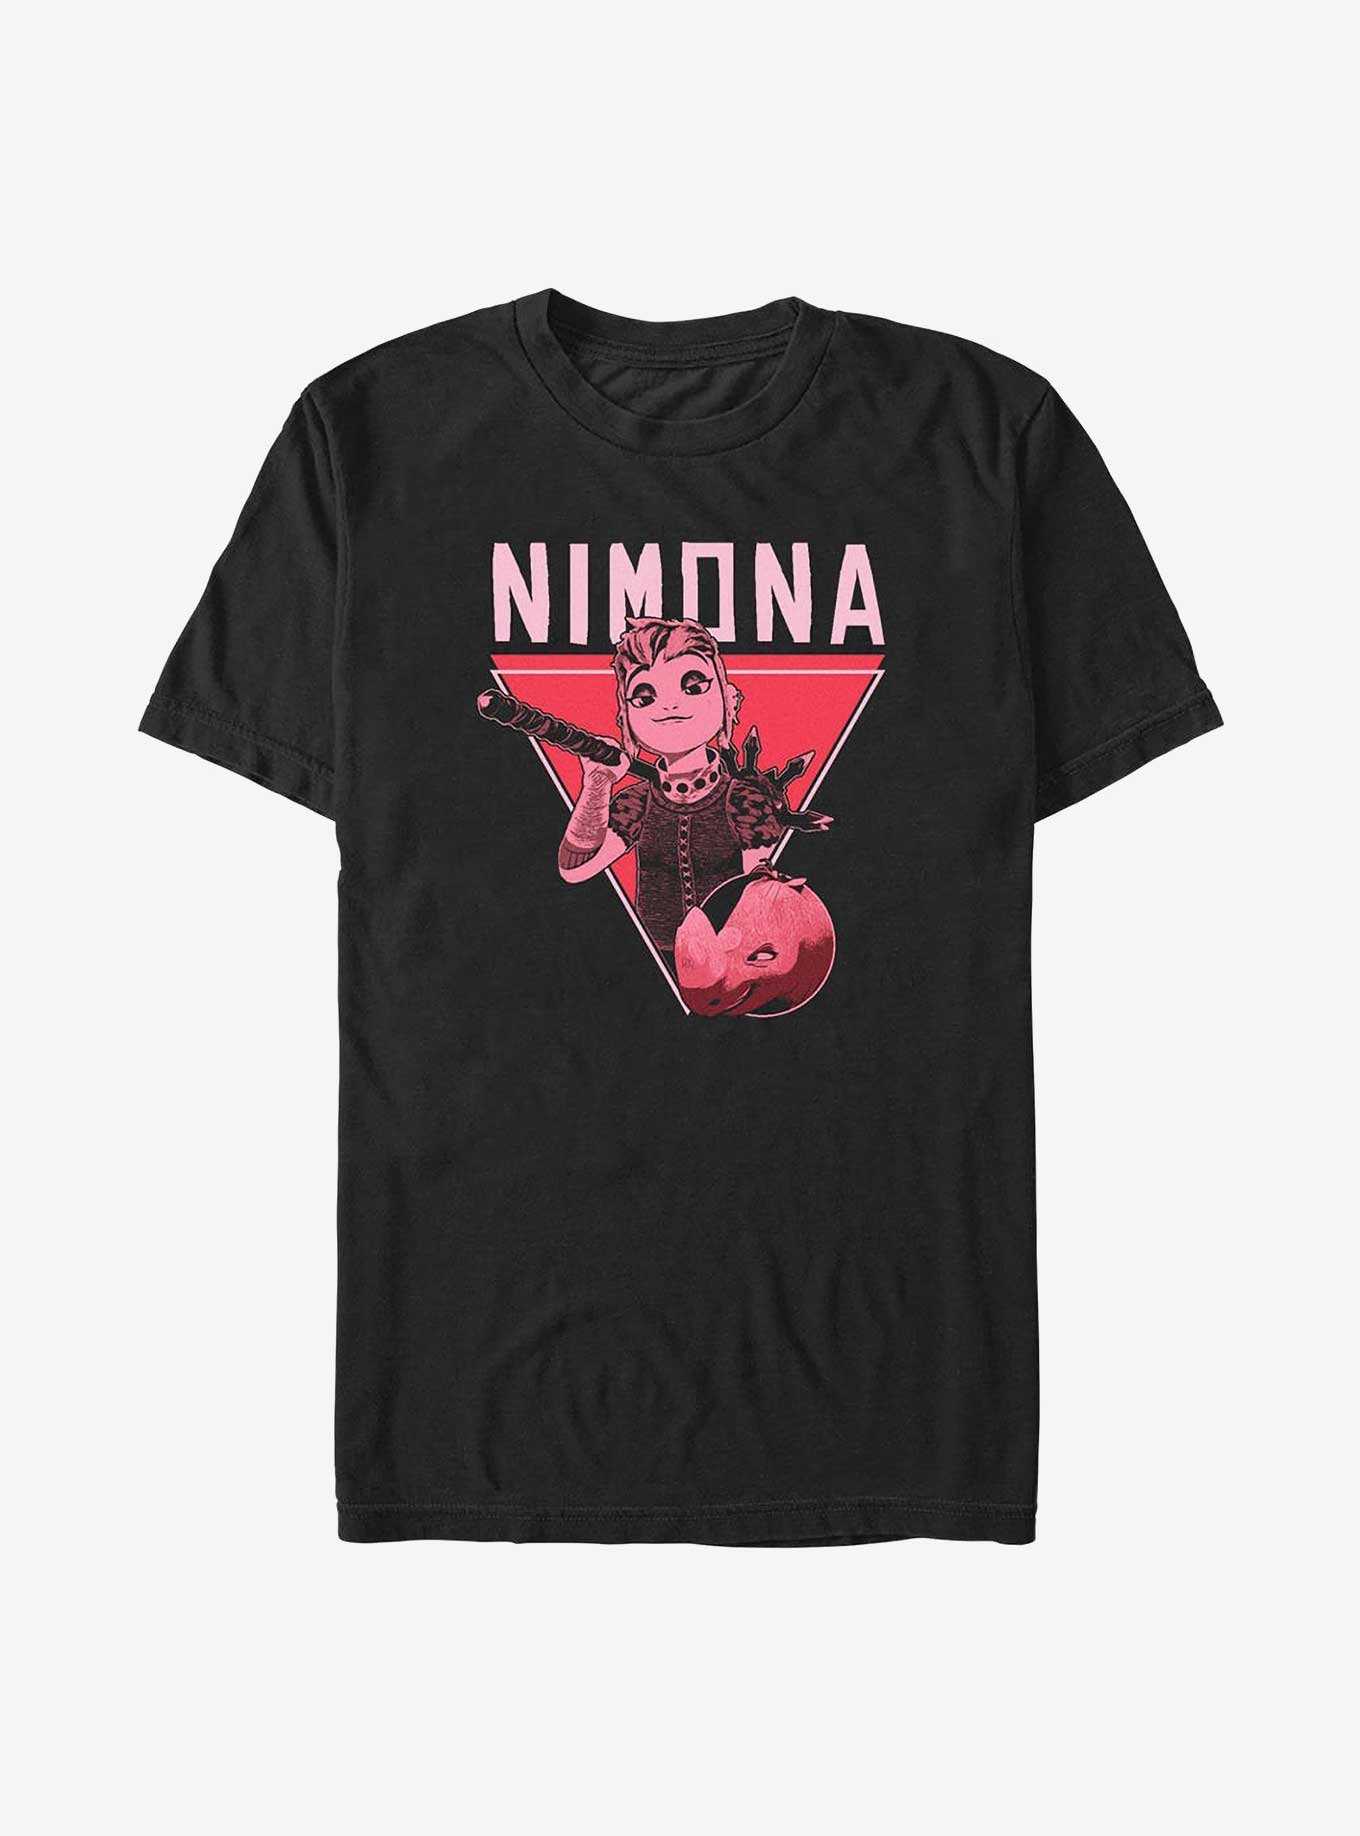 Nimona Badge T-Shirt, , hi-res